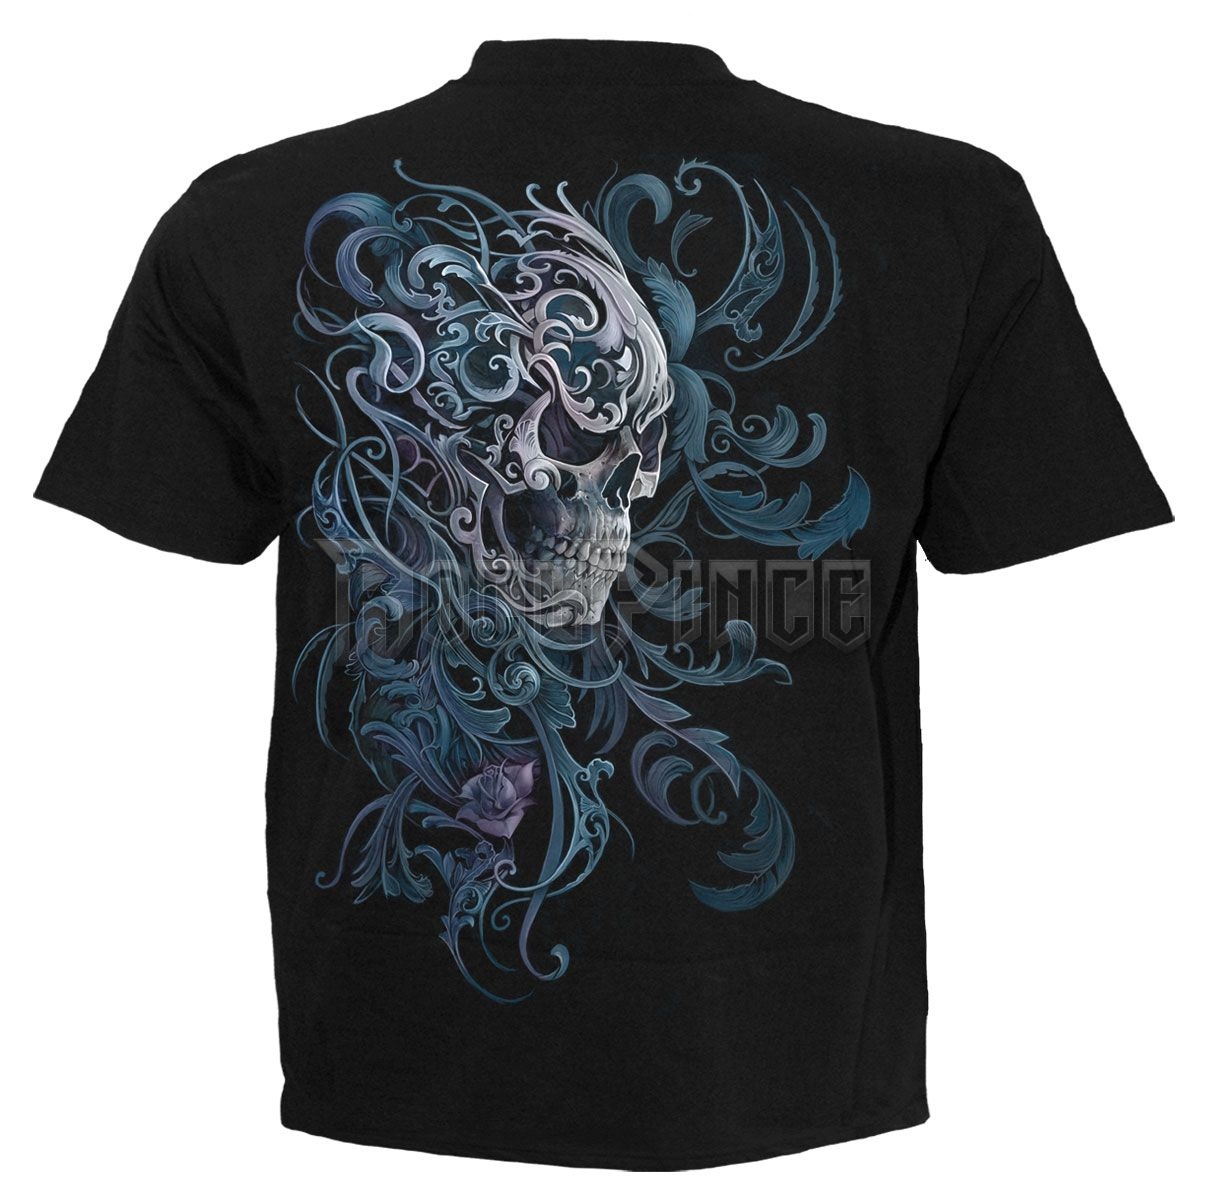 ROCOCO SKULL - T-Shirt Black - T162M101